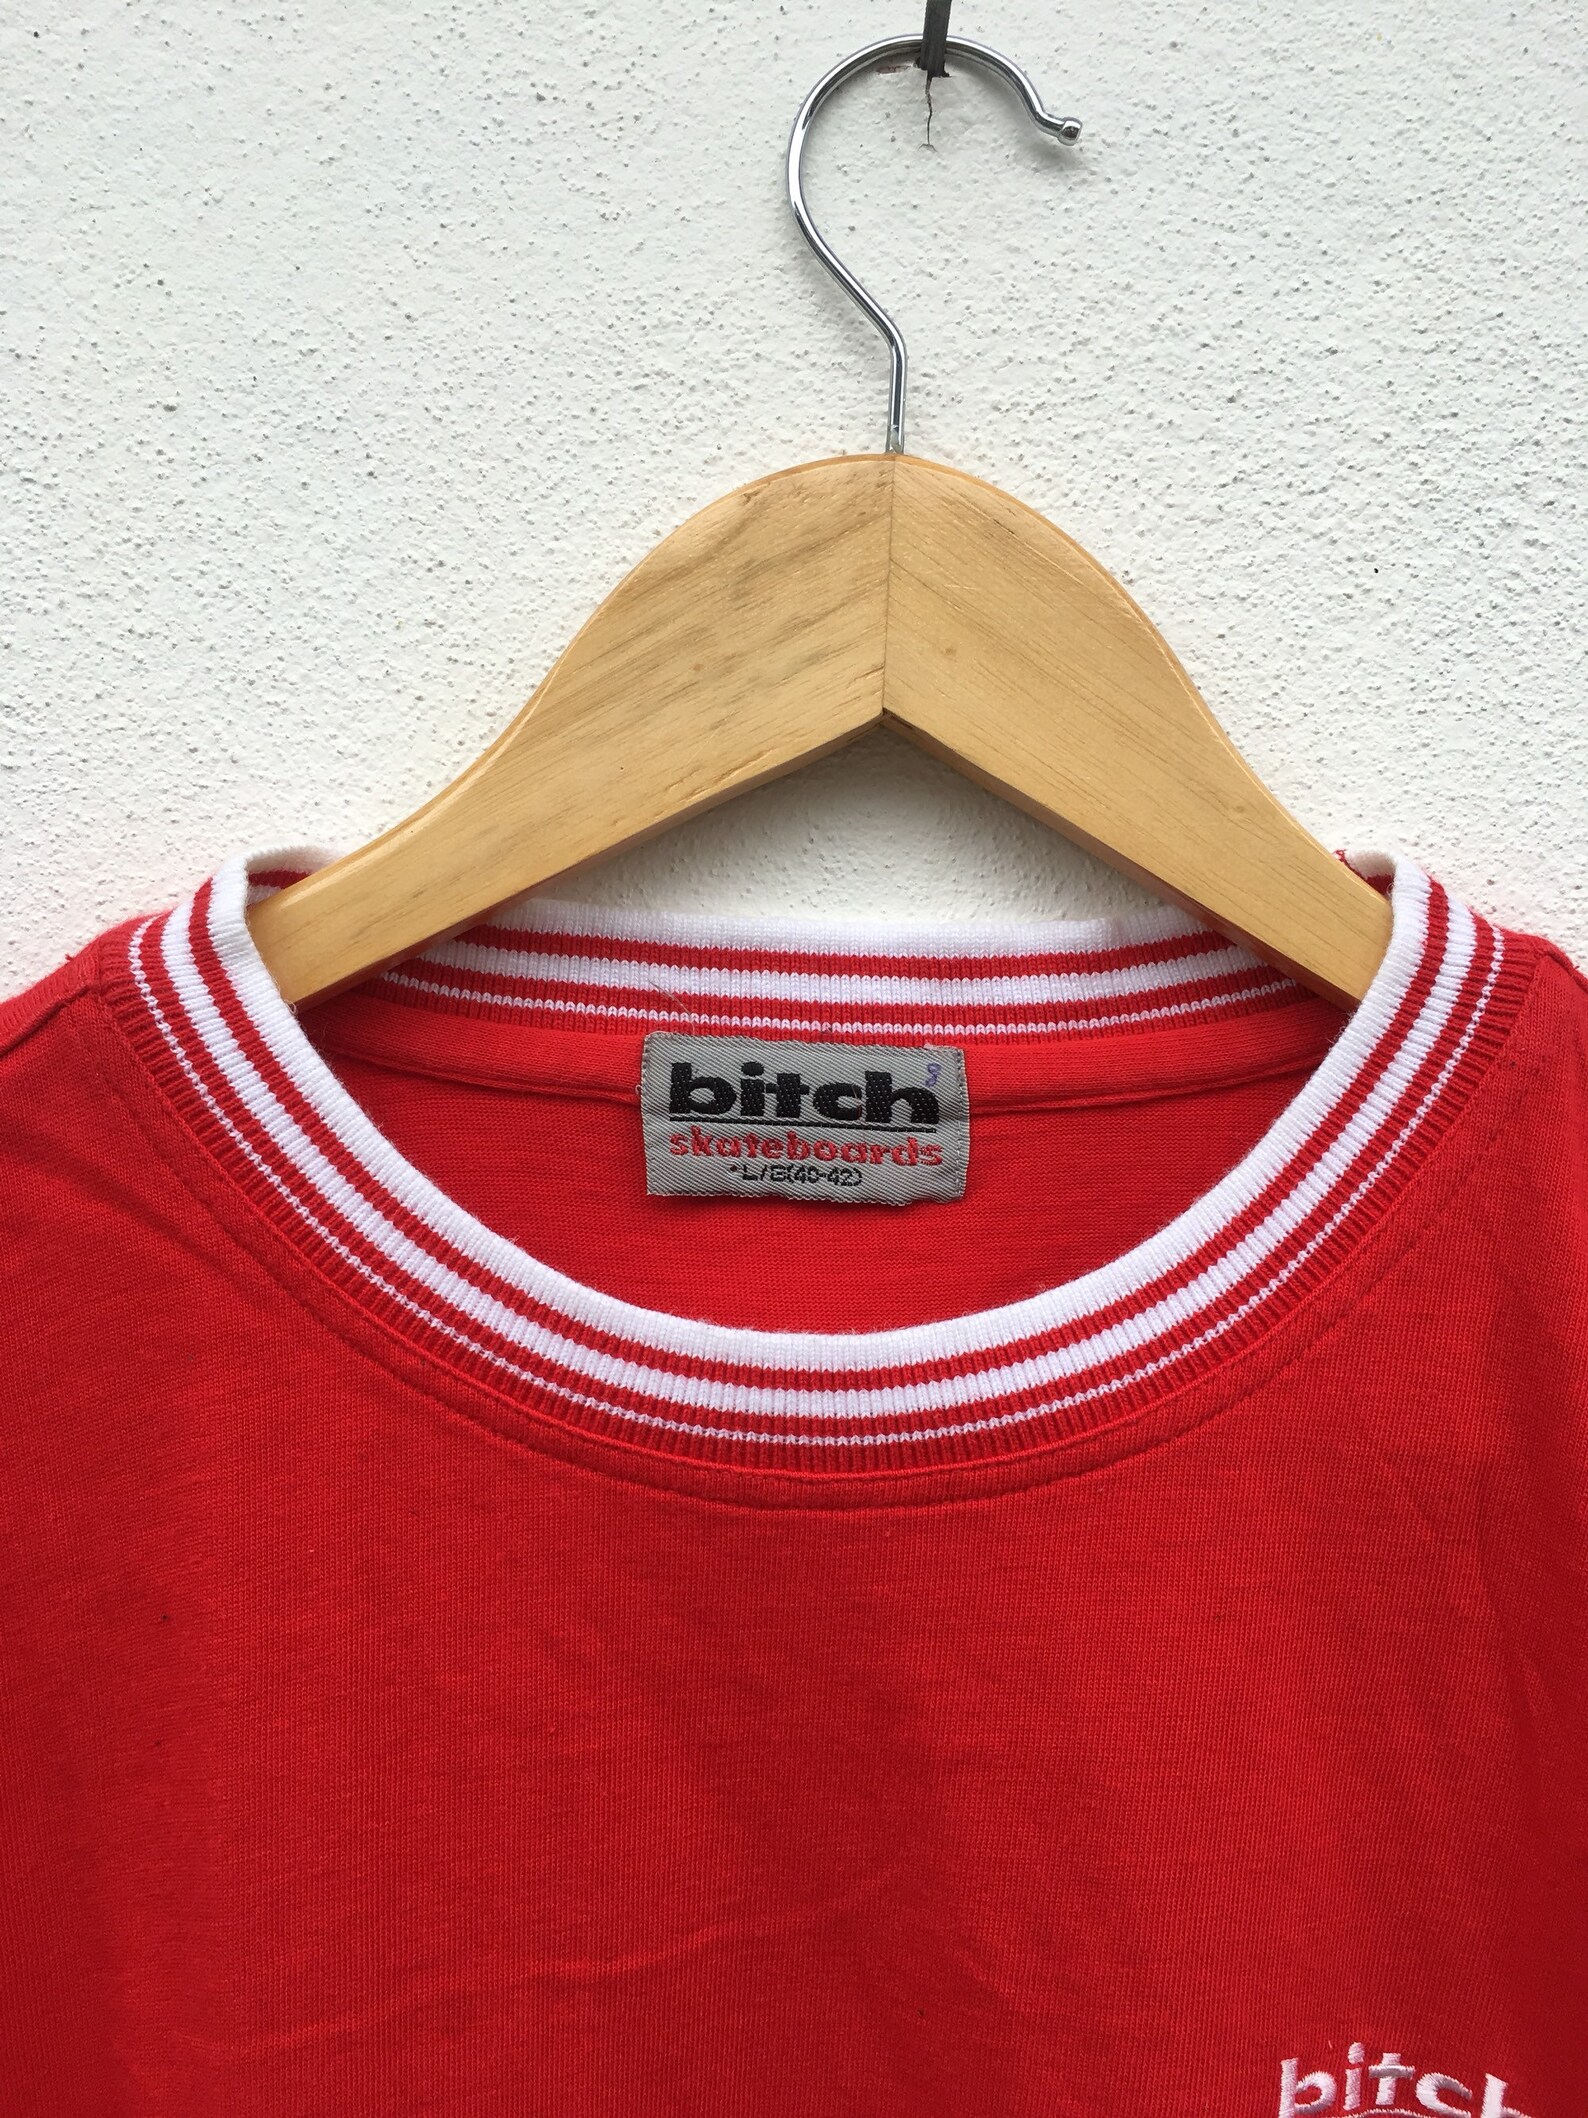 Rare Bitch Skateboards shirt | Etsy